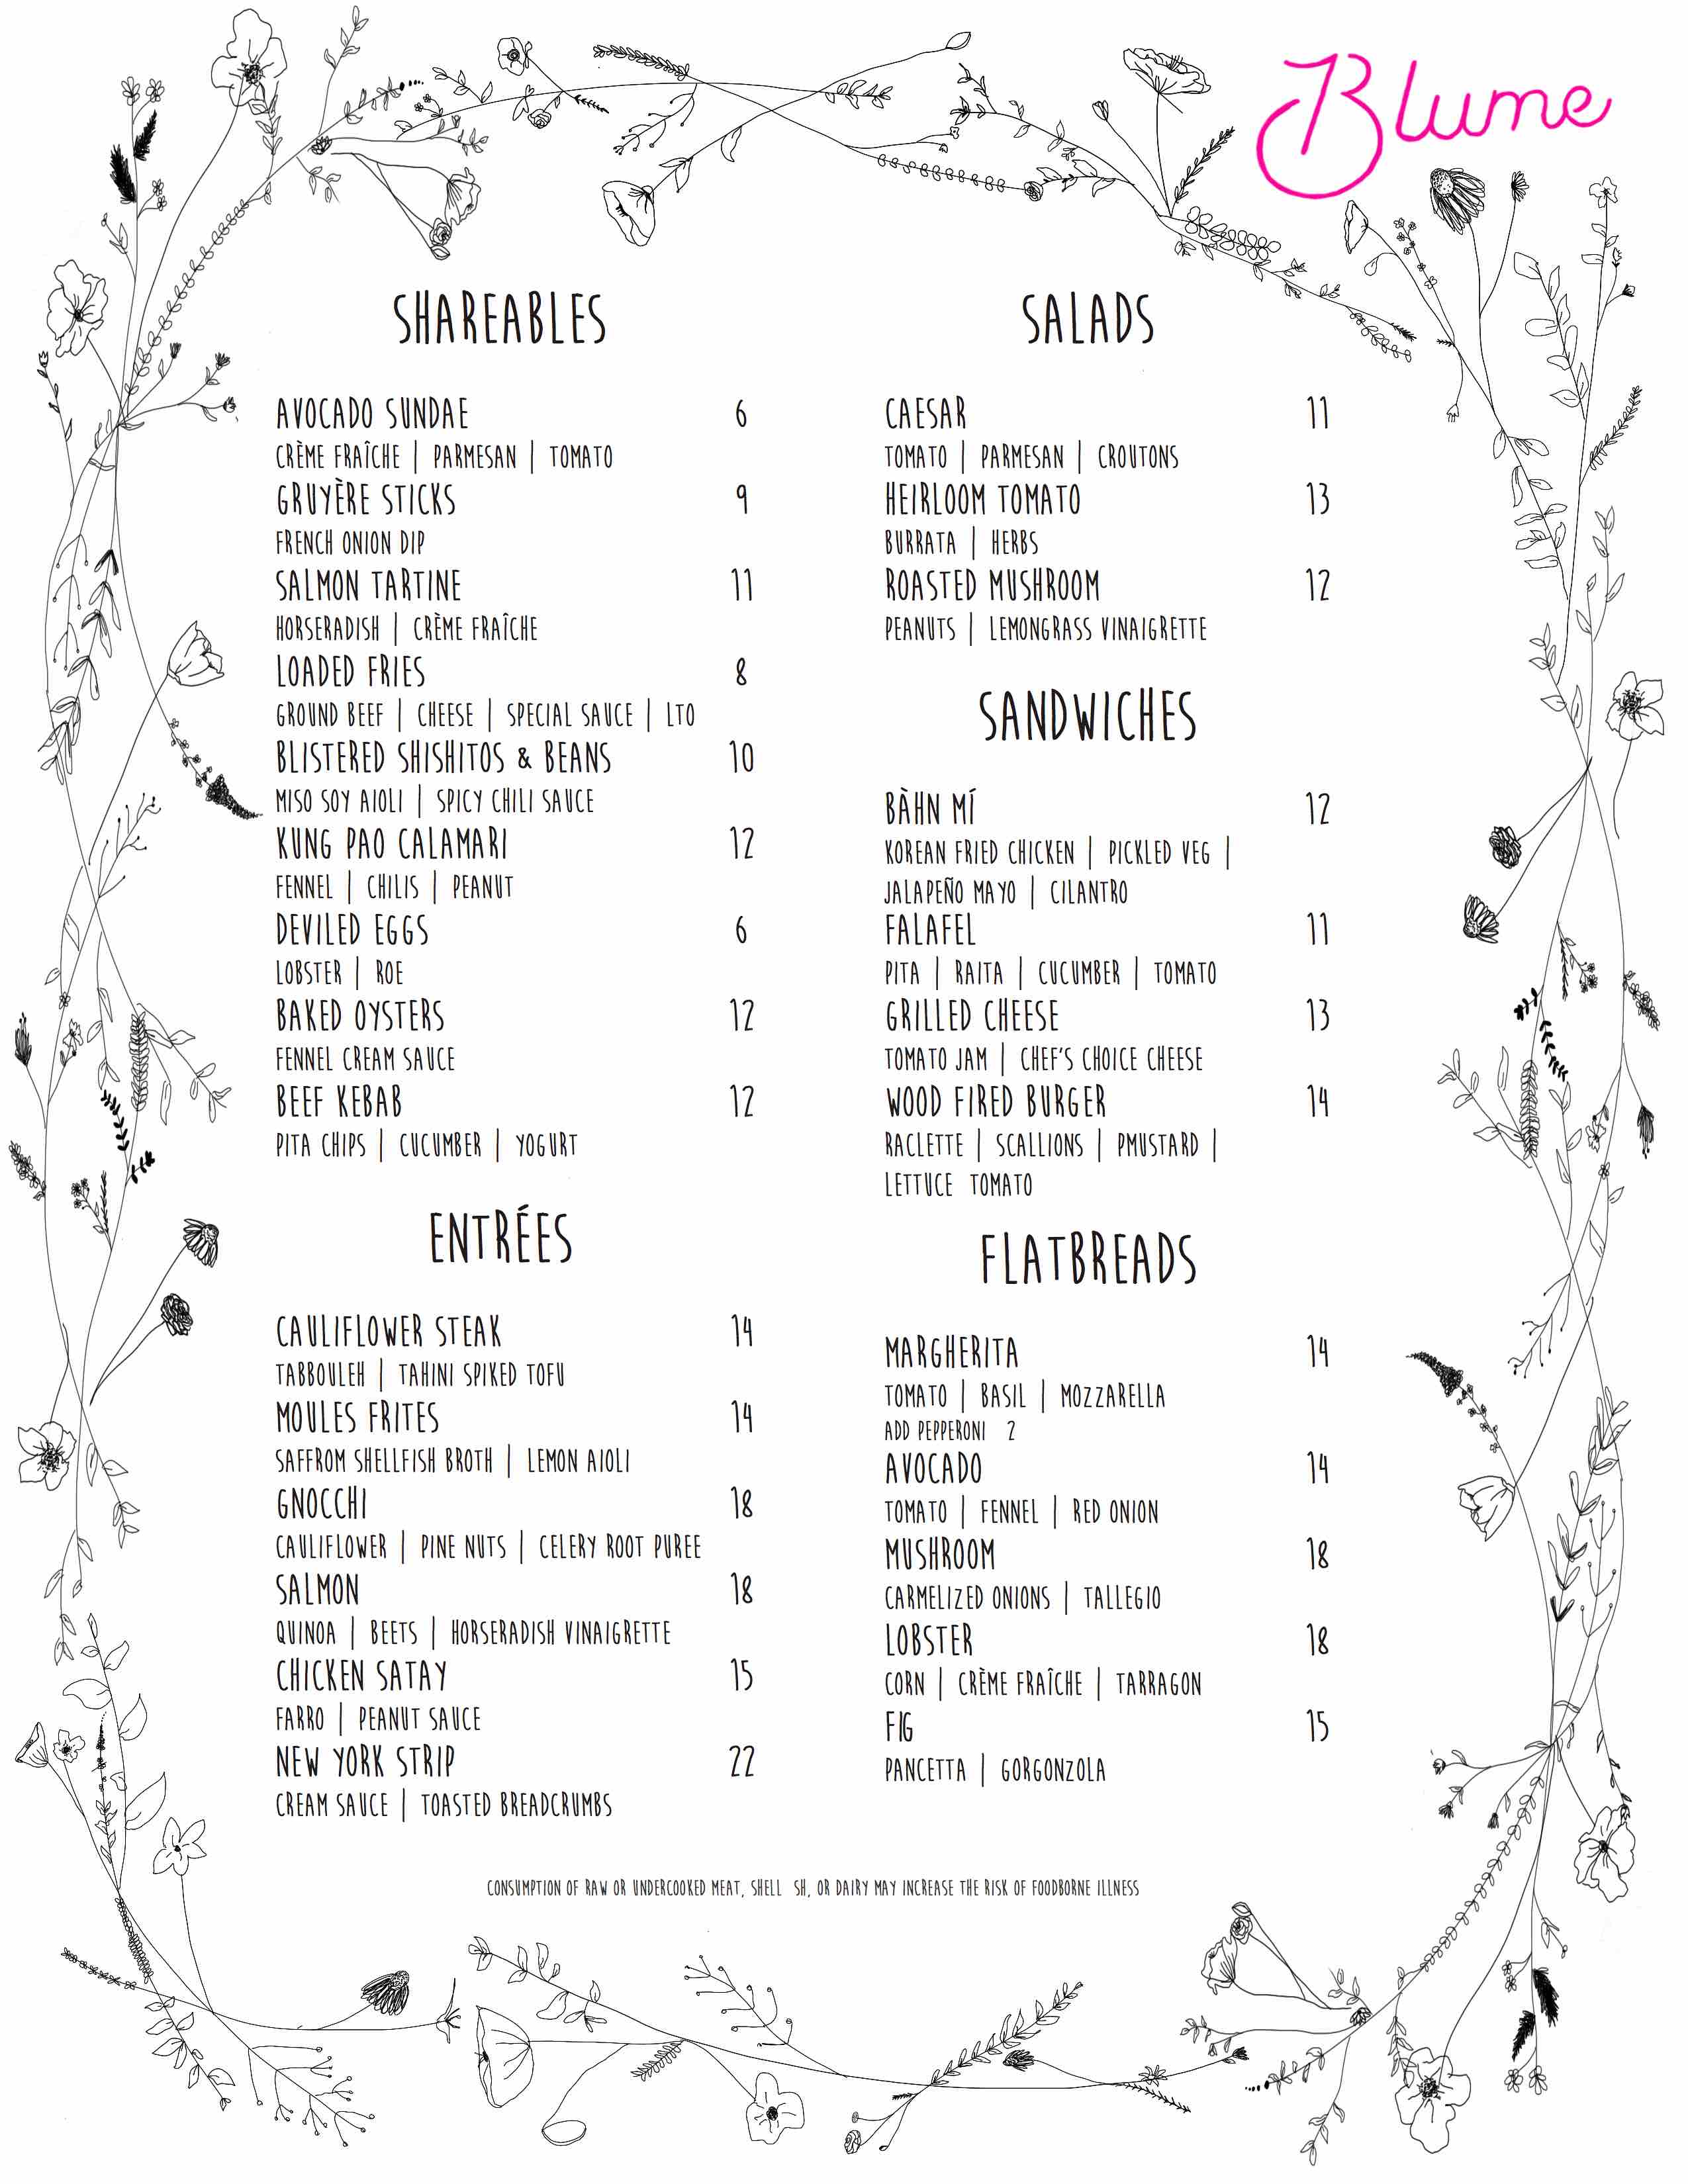 blume rittenhouse philadelphia bar restaurant menu